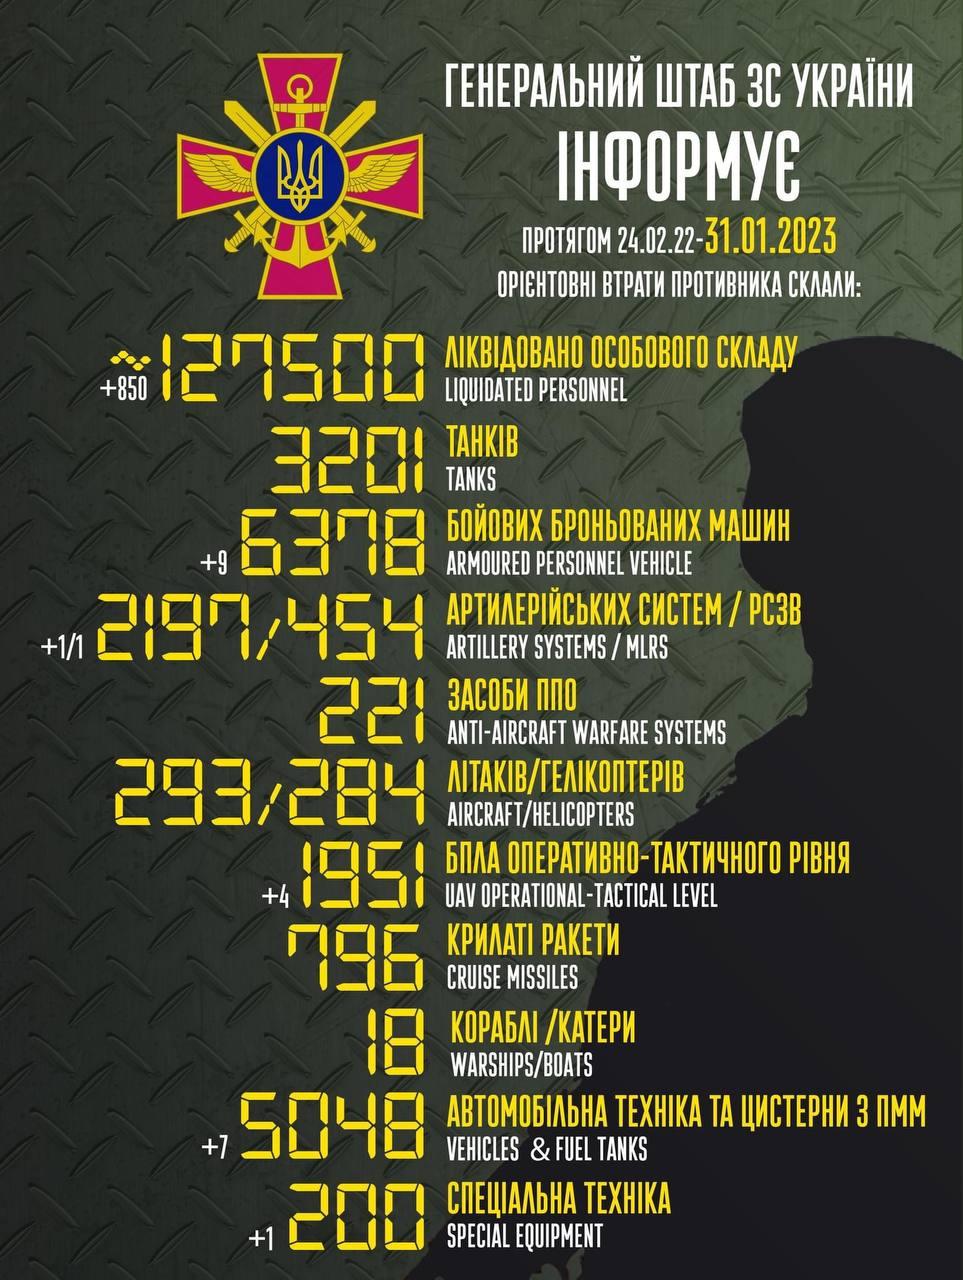 Russia’s losses in Ukraine as of 31/01/2023